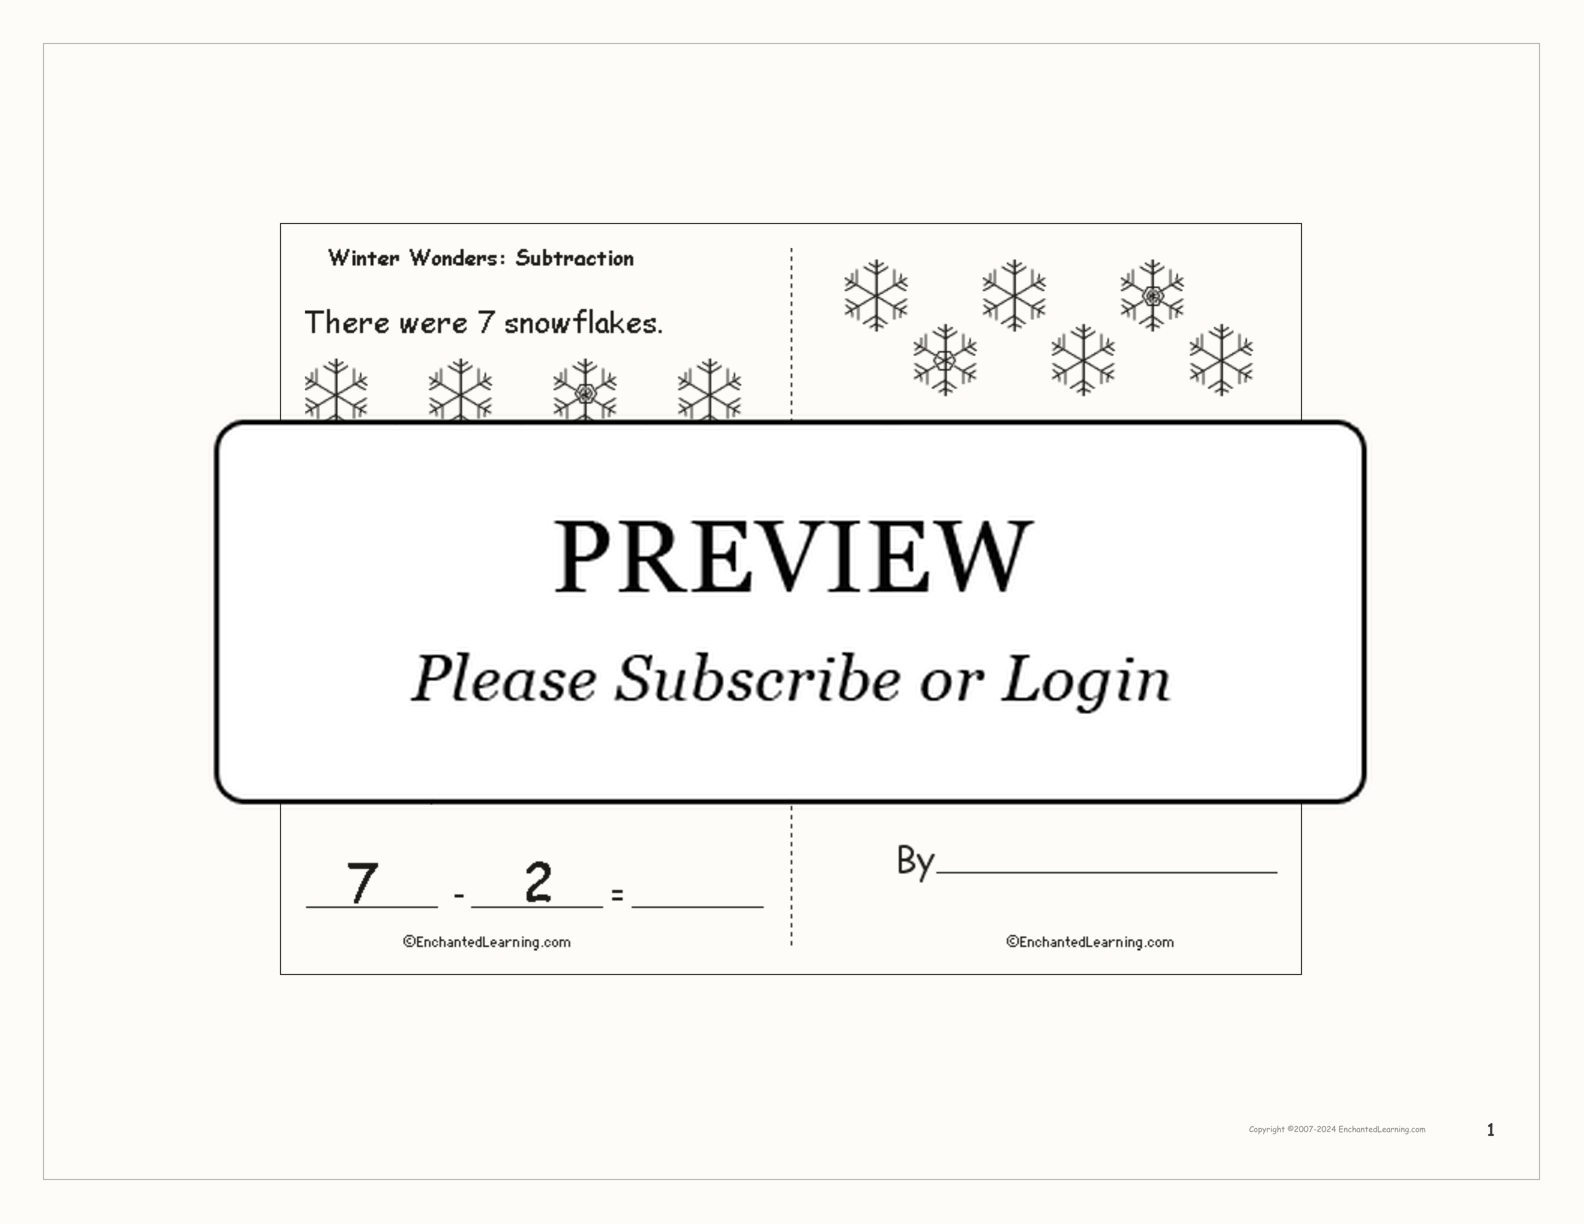 Winter Wonders: Subtraction Book interactive worksheet page 1